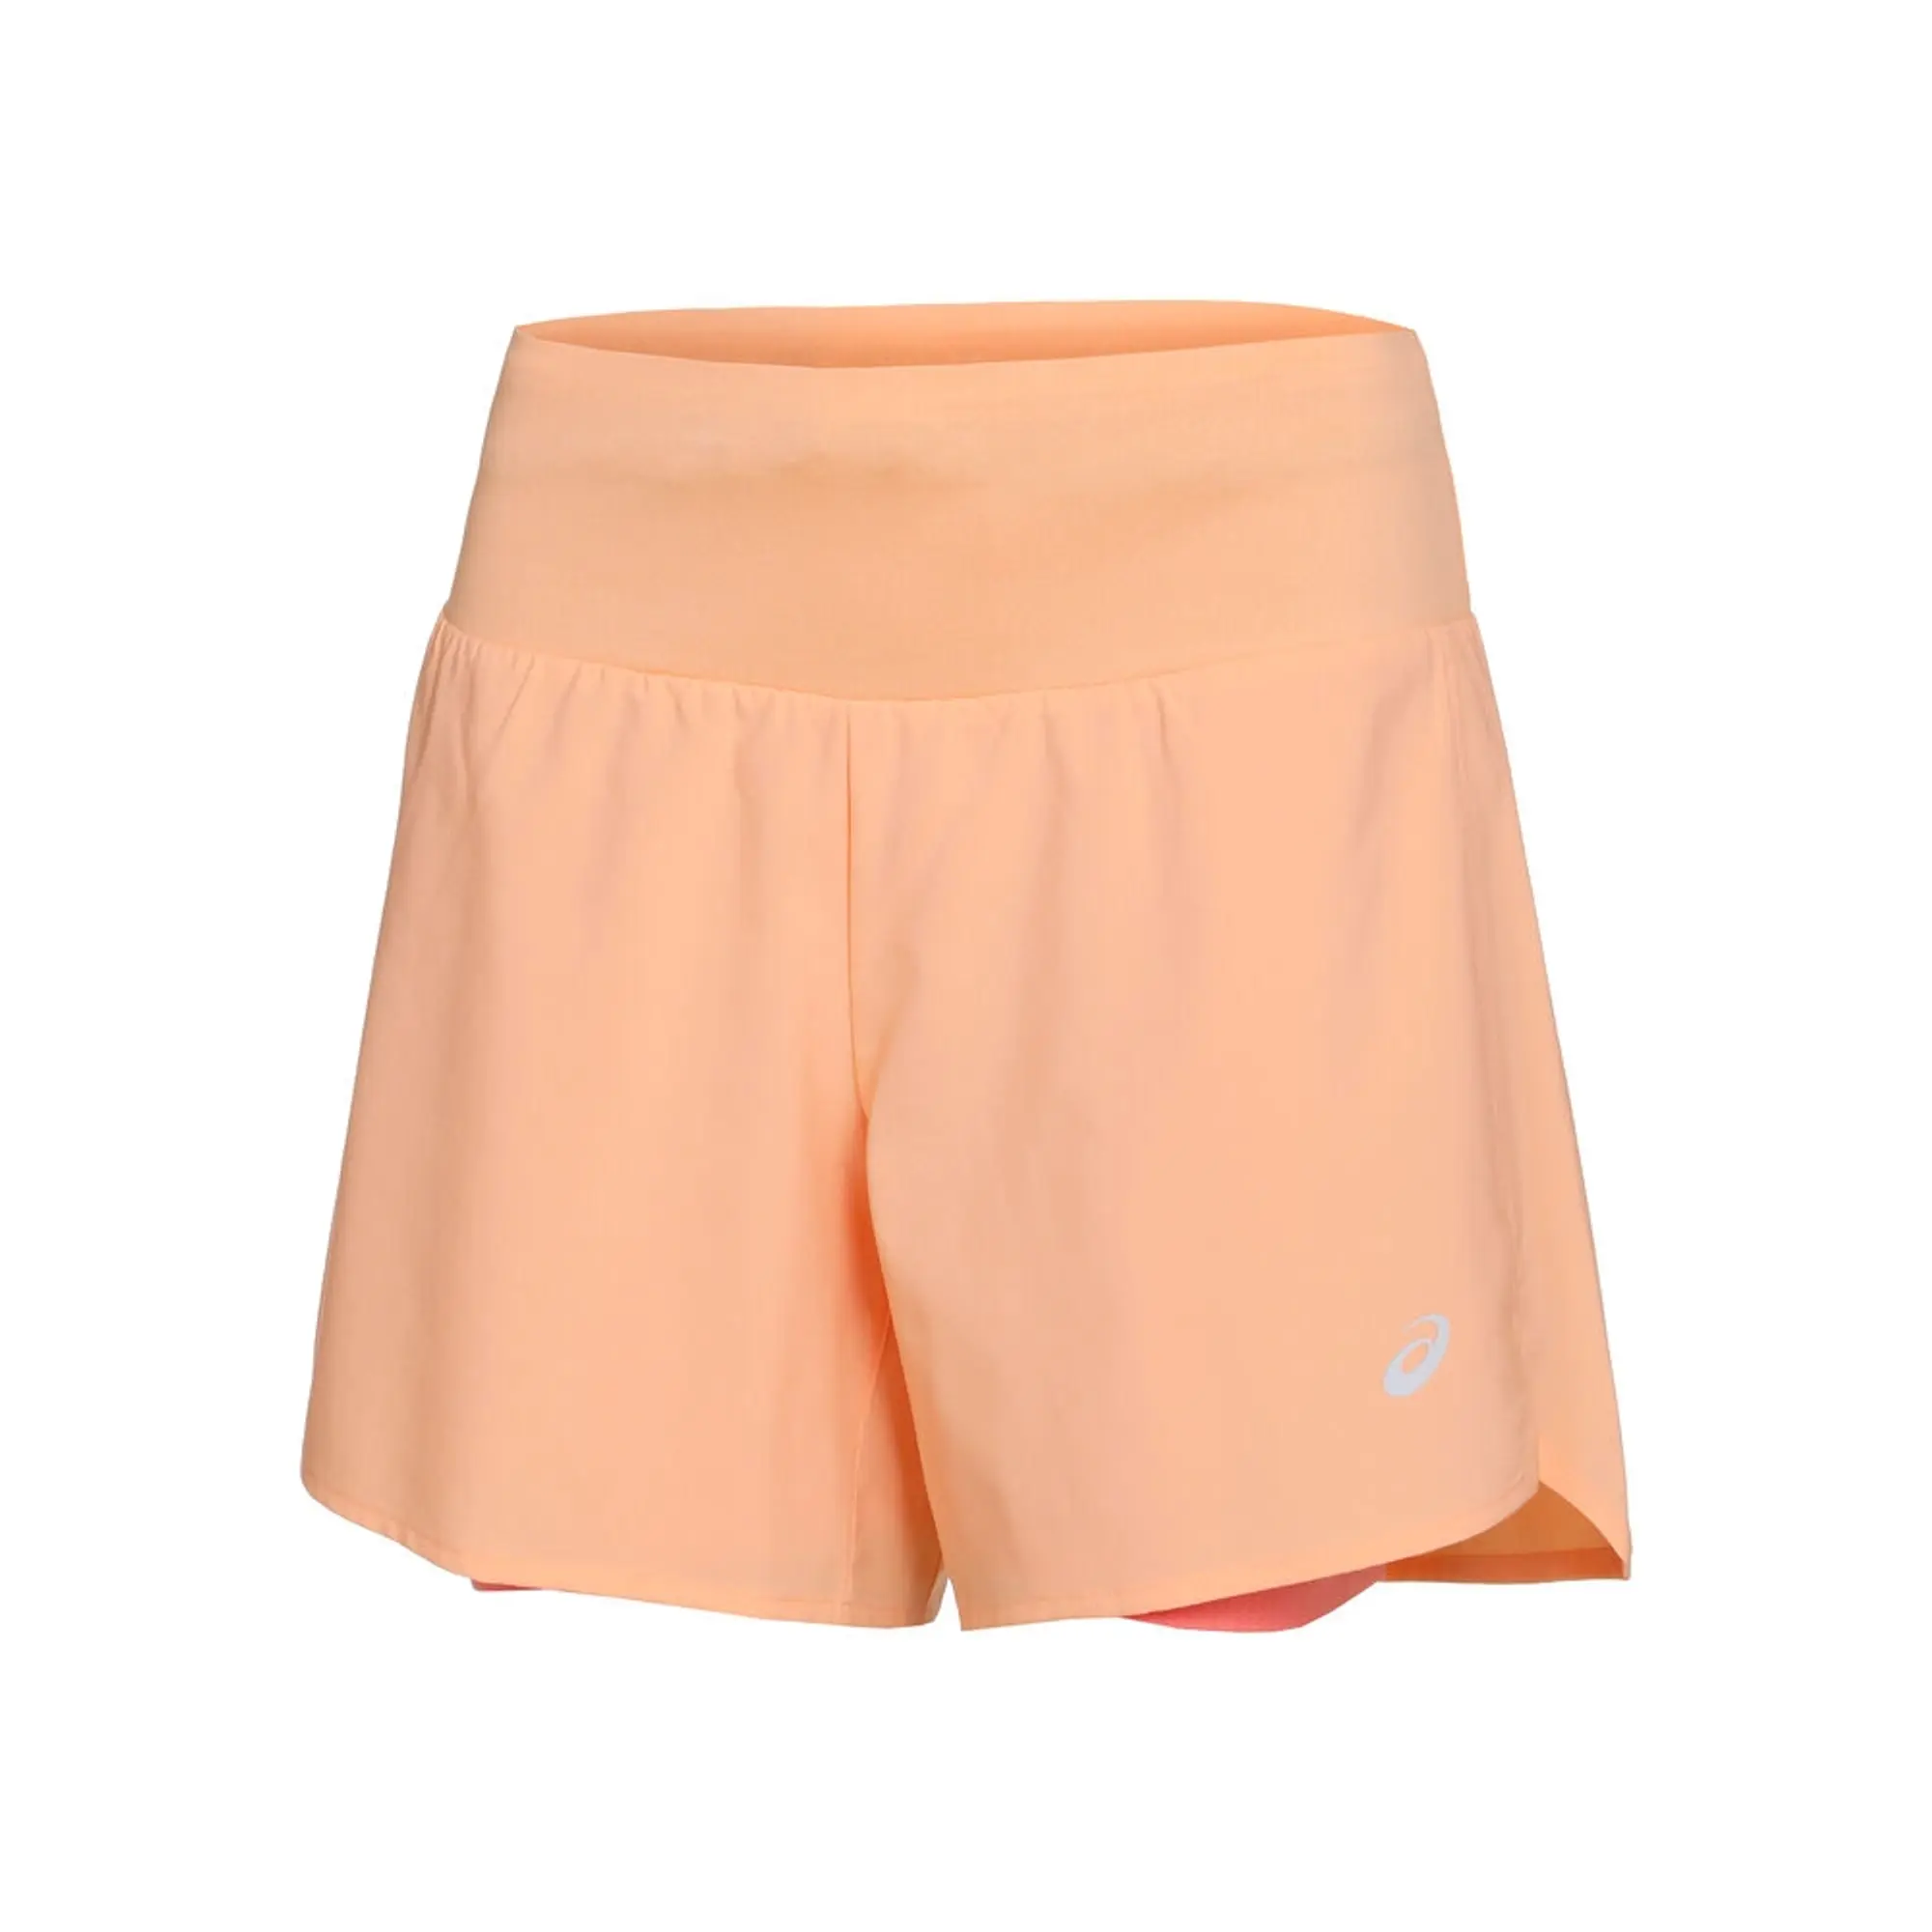 ASICS Road 2in1 5.5in Shorts Women - Orange, Pink